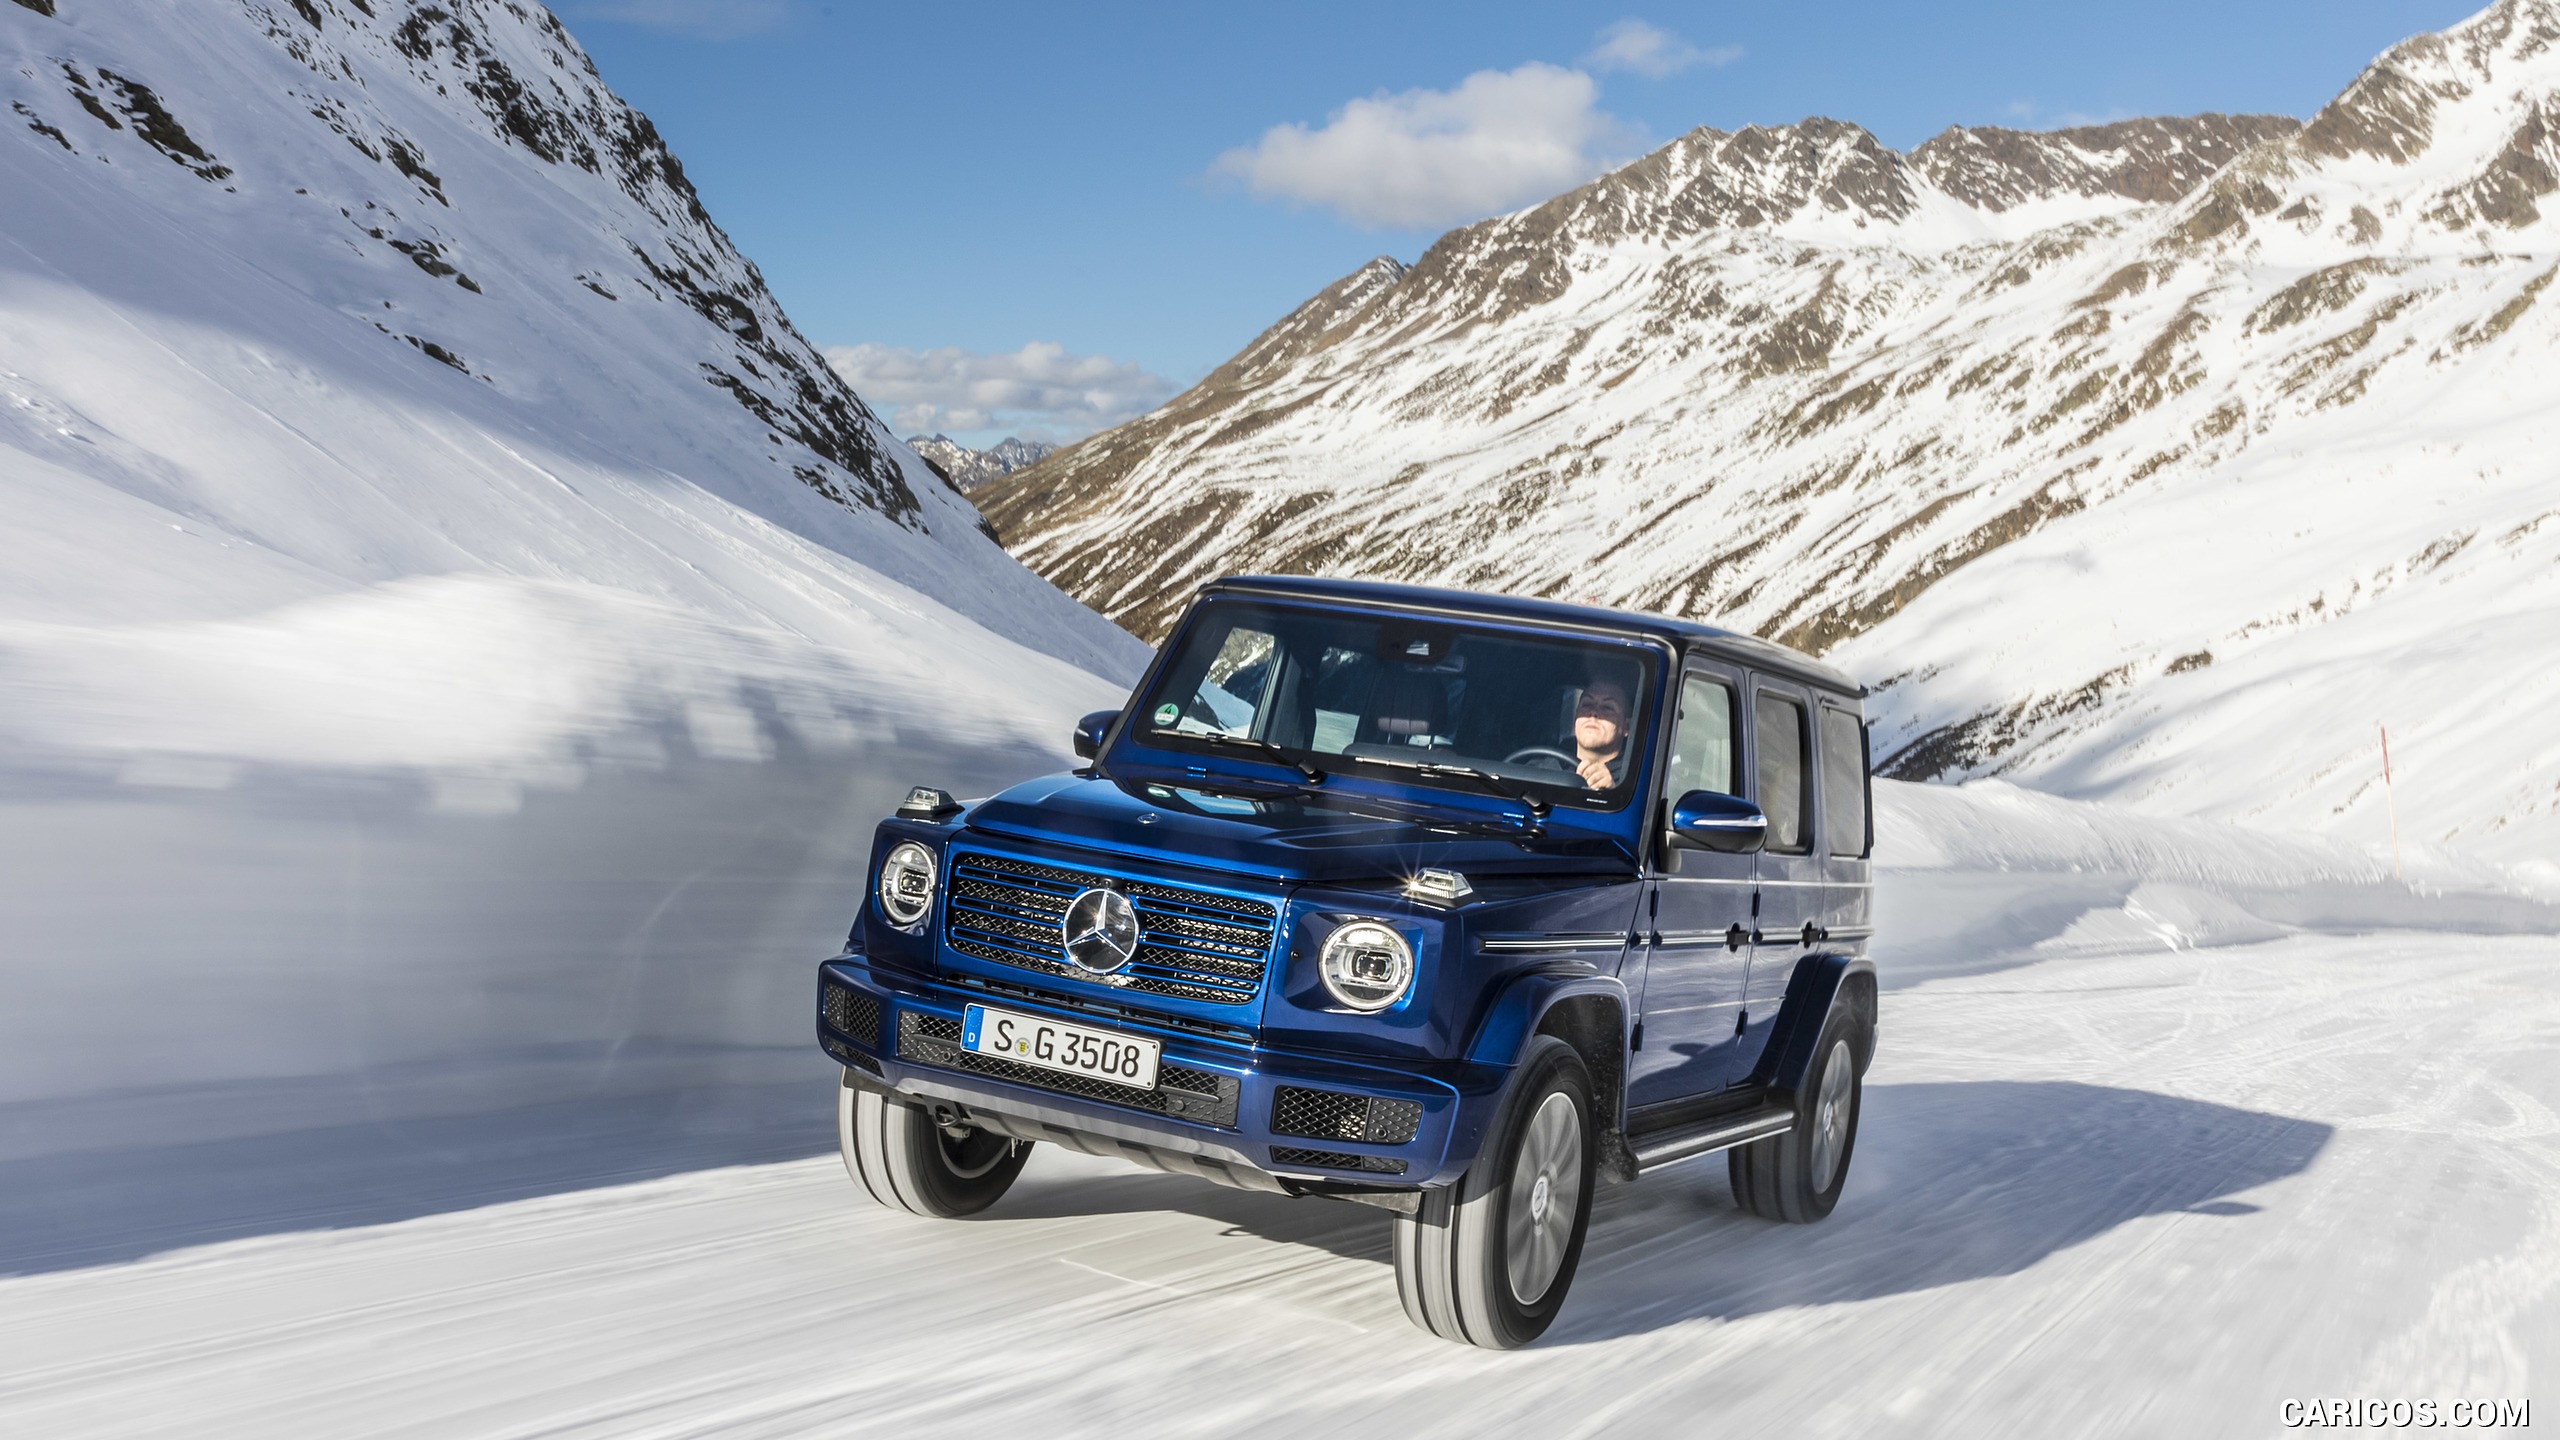 2019 Mercedes-Benz G 350 d (Brilliant Blue Metallic) - In Snow - Front Three-Quarter, #28 of 51